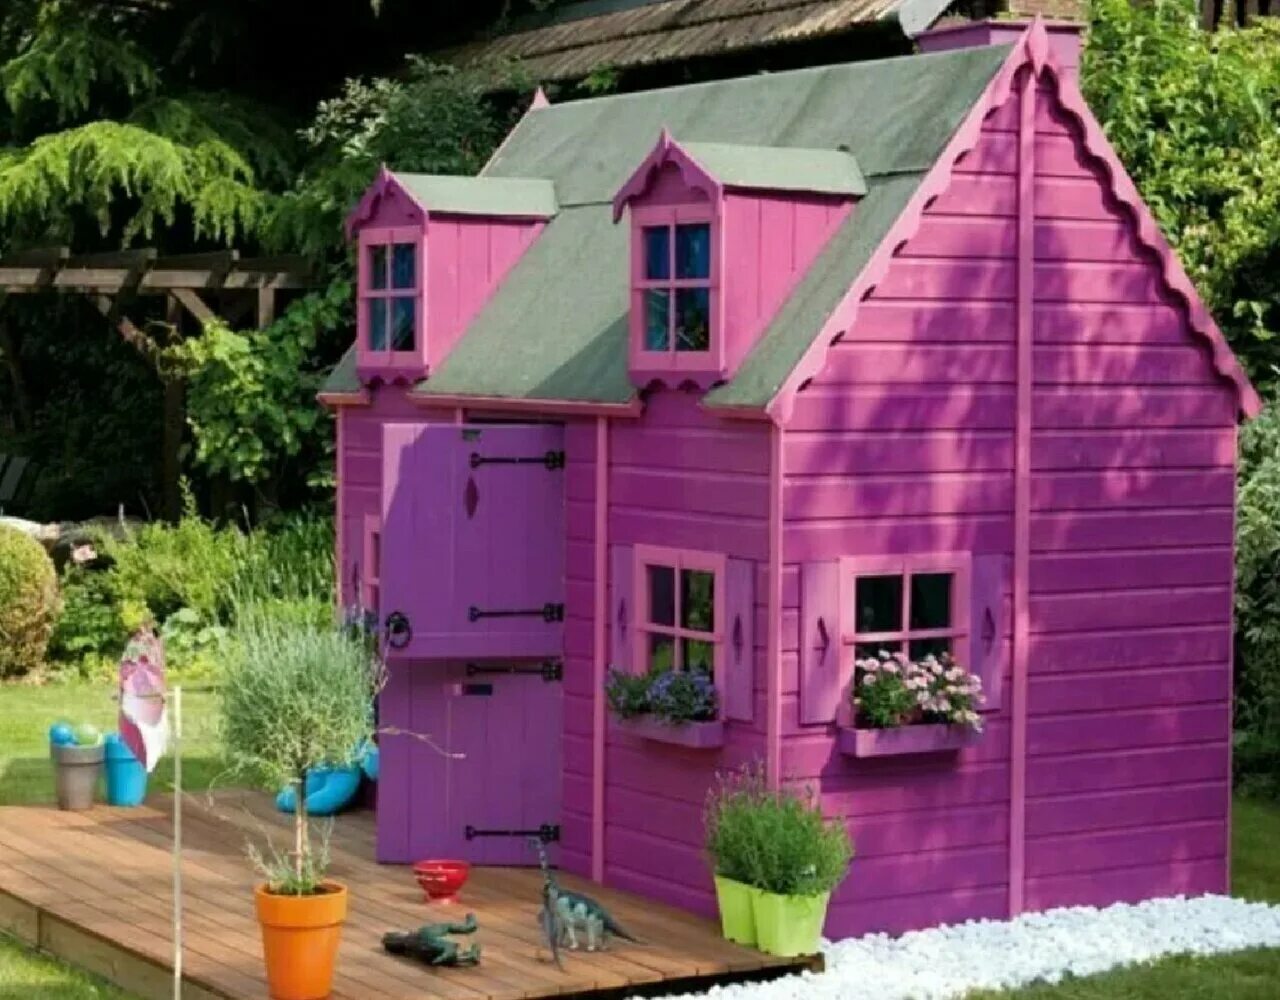 Включи дети домик. Детский домик двухэтажный. Домик для девочки на даче. Двухэтажный детский домик для дачи. Детский деревянный домик для дачи.